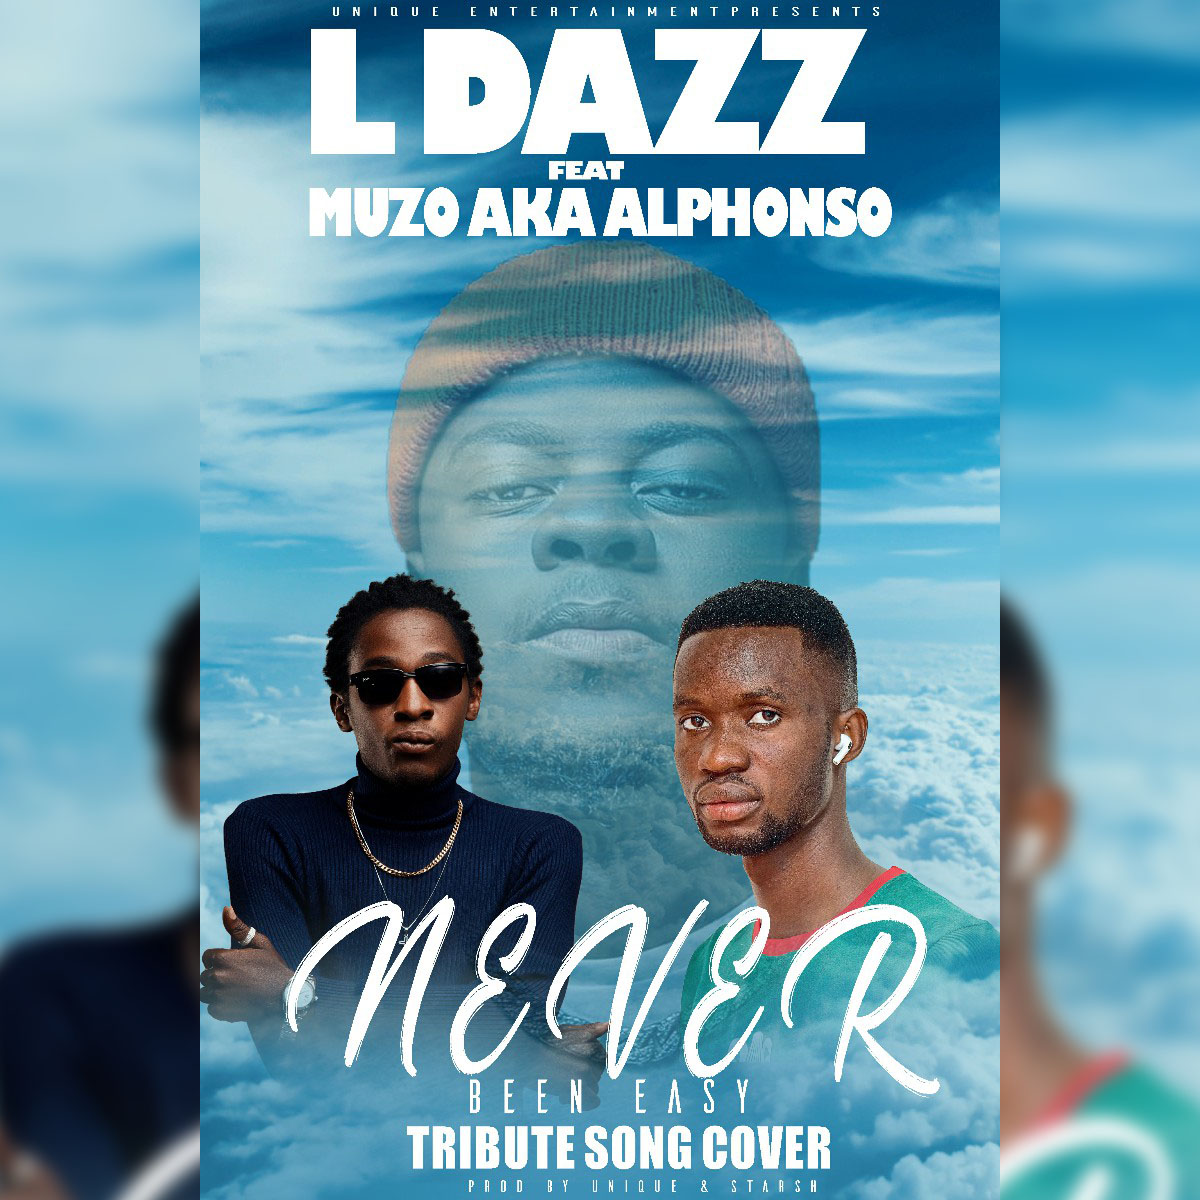 L Dazz ft. Muzo AKA Alphonso - Never Been Easy (Daev Tribute)